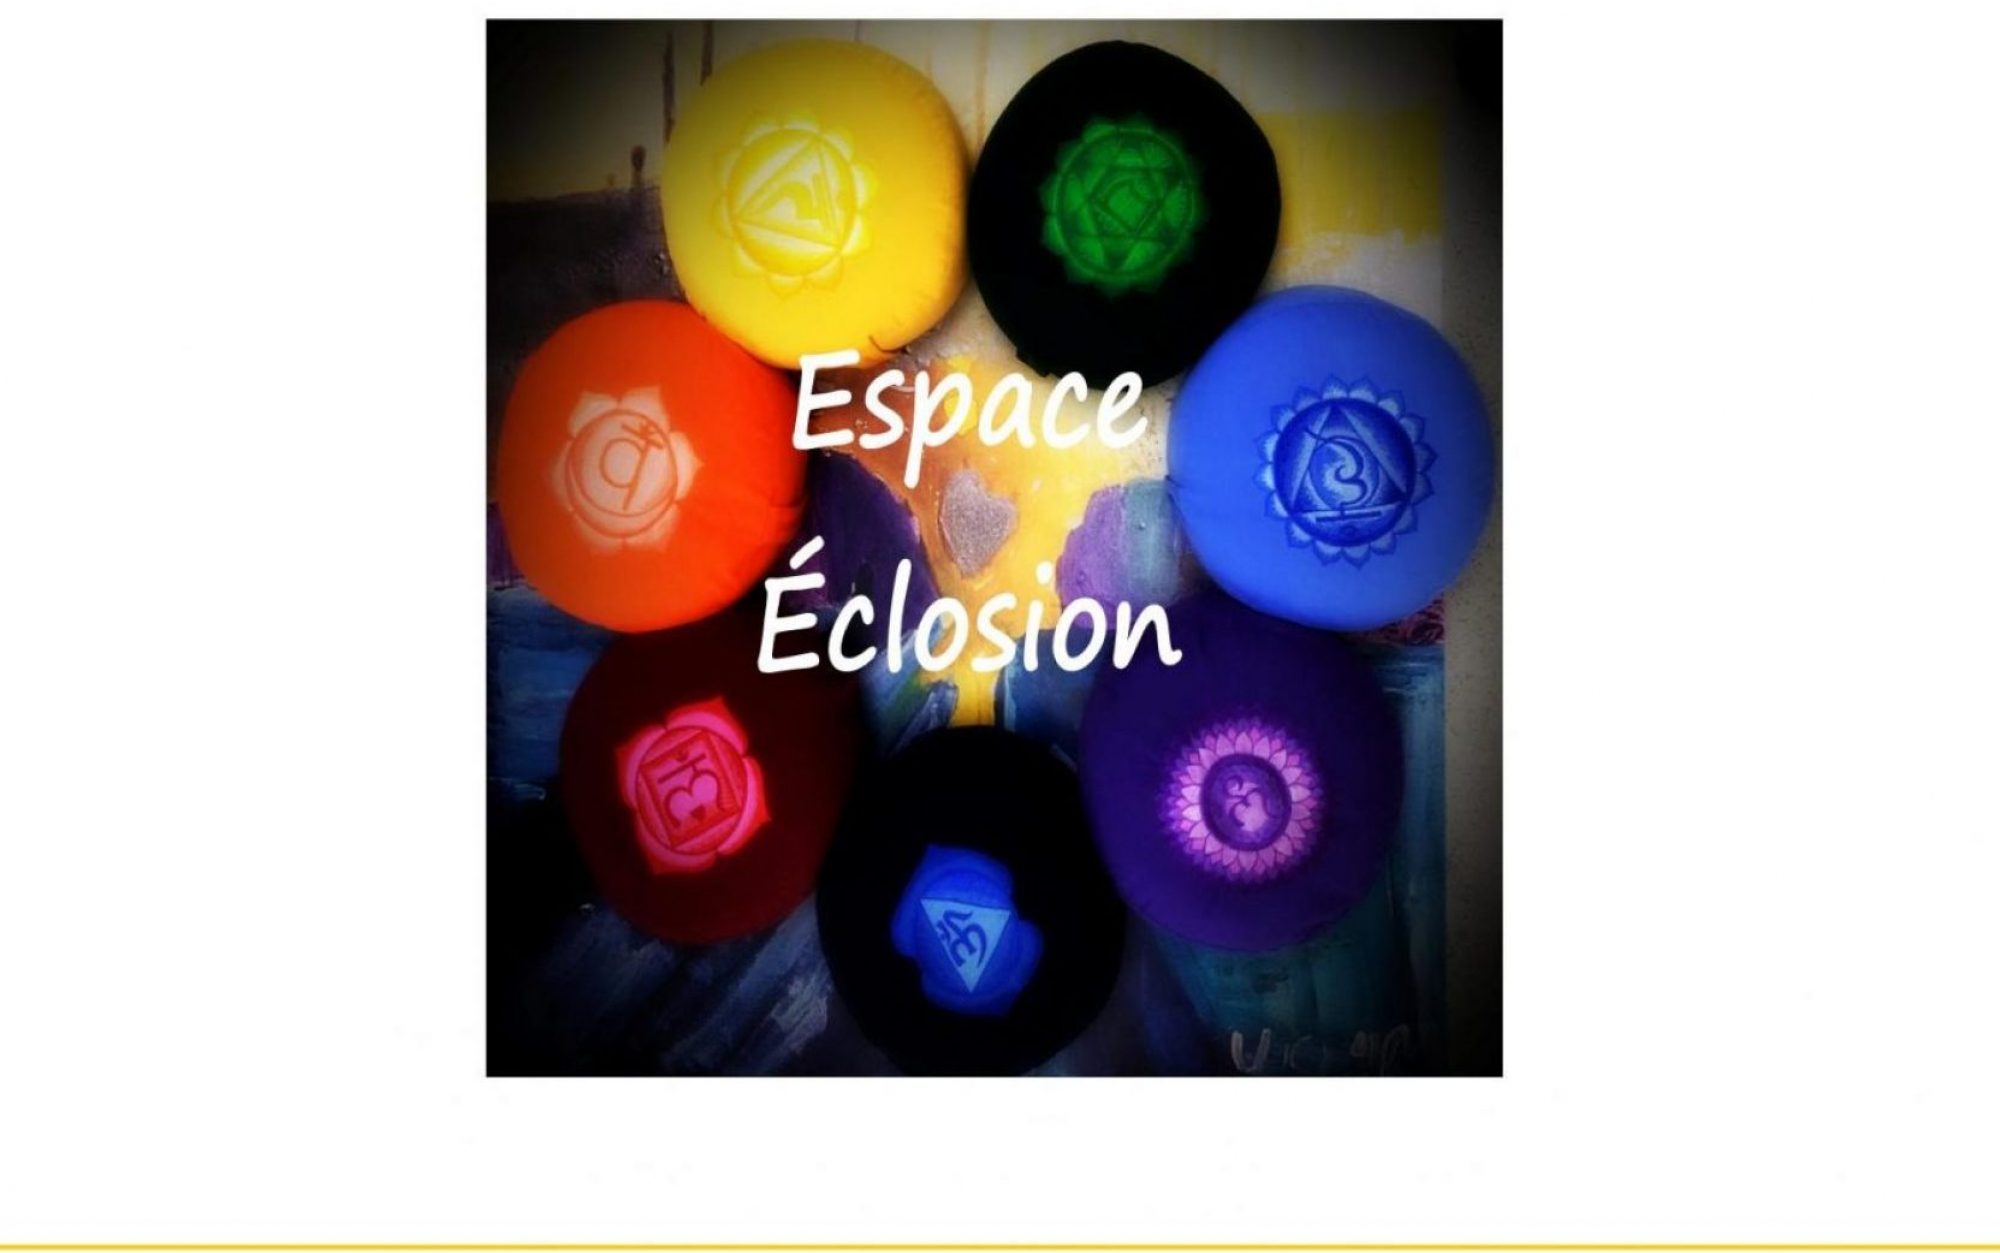 Espace Eclosion